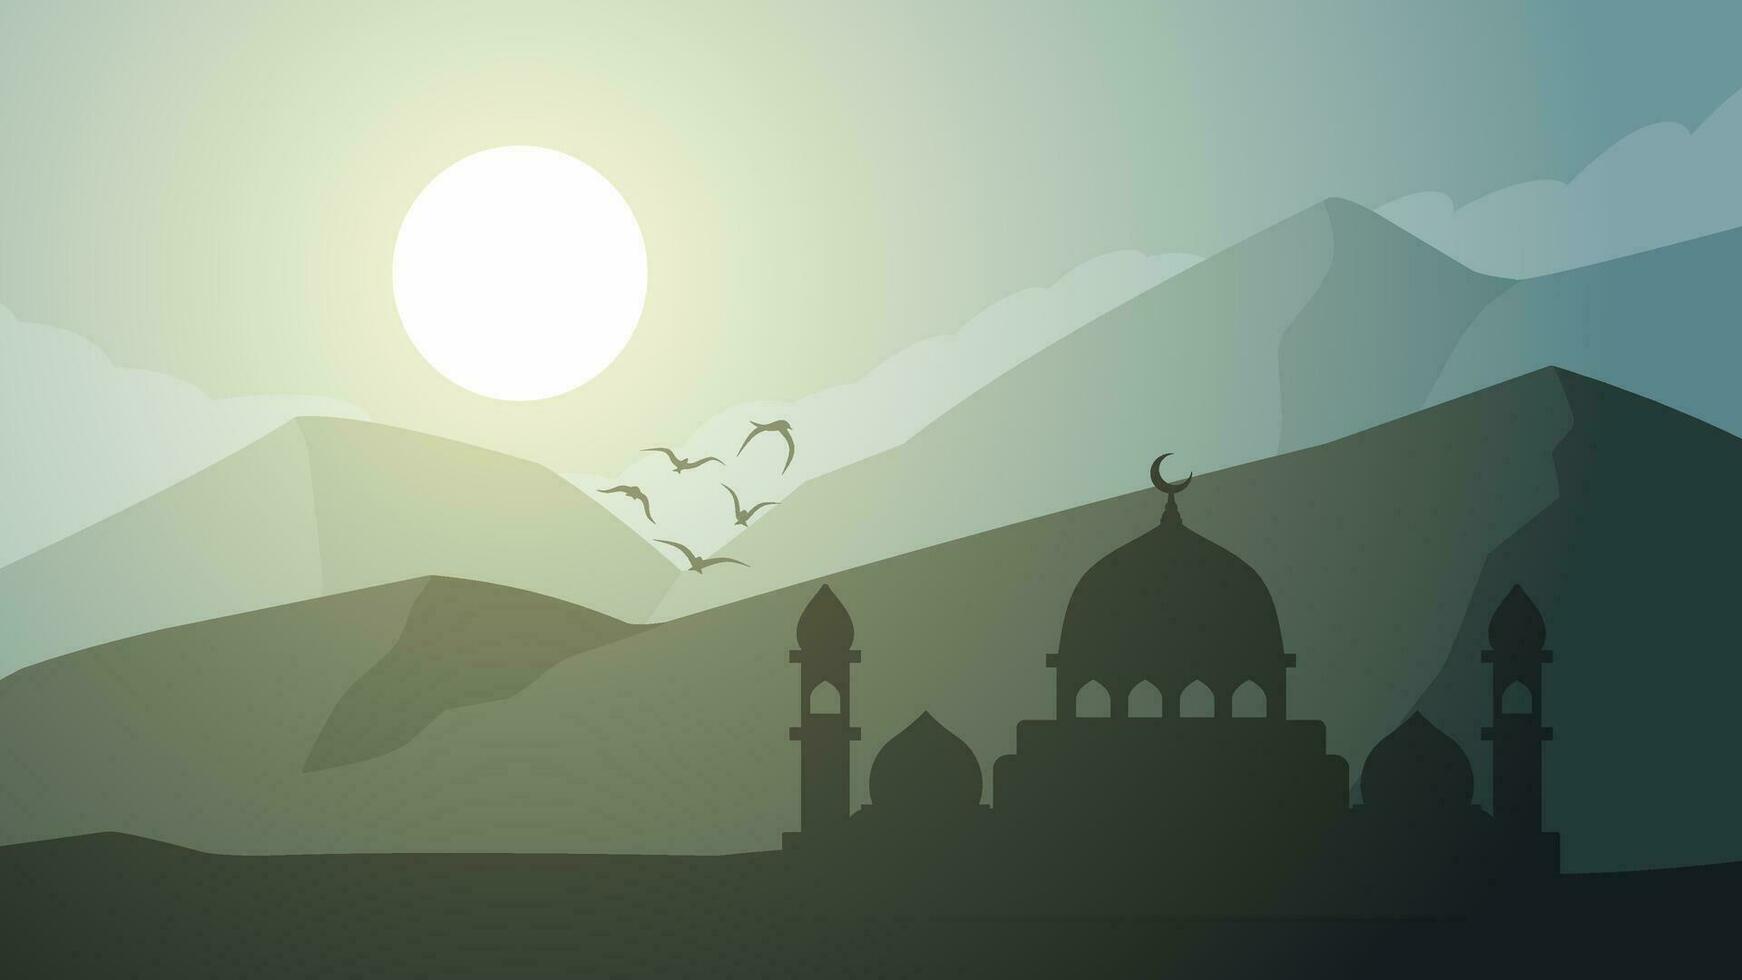 Ramadan landscape silhouette in the night vector illustration. Ramadan scenery design graphic in muslim culture and islam religion. Mosque landscape illustration, background or wallpaper